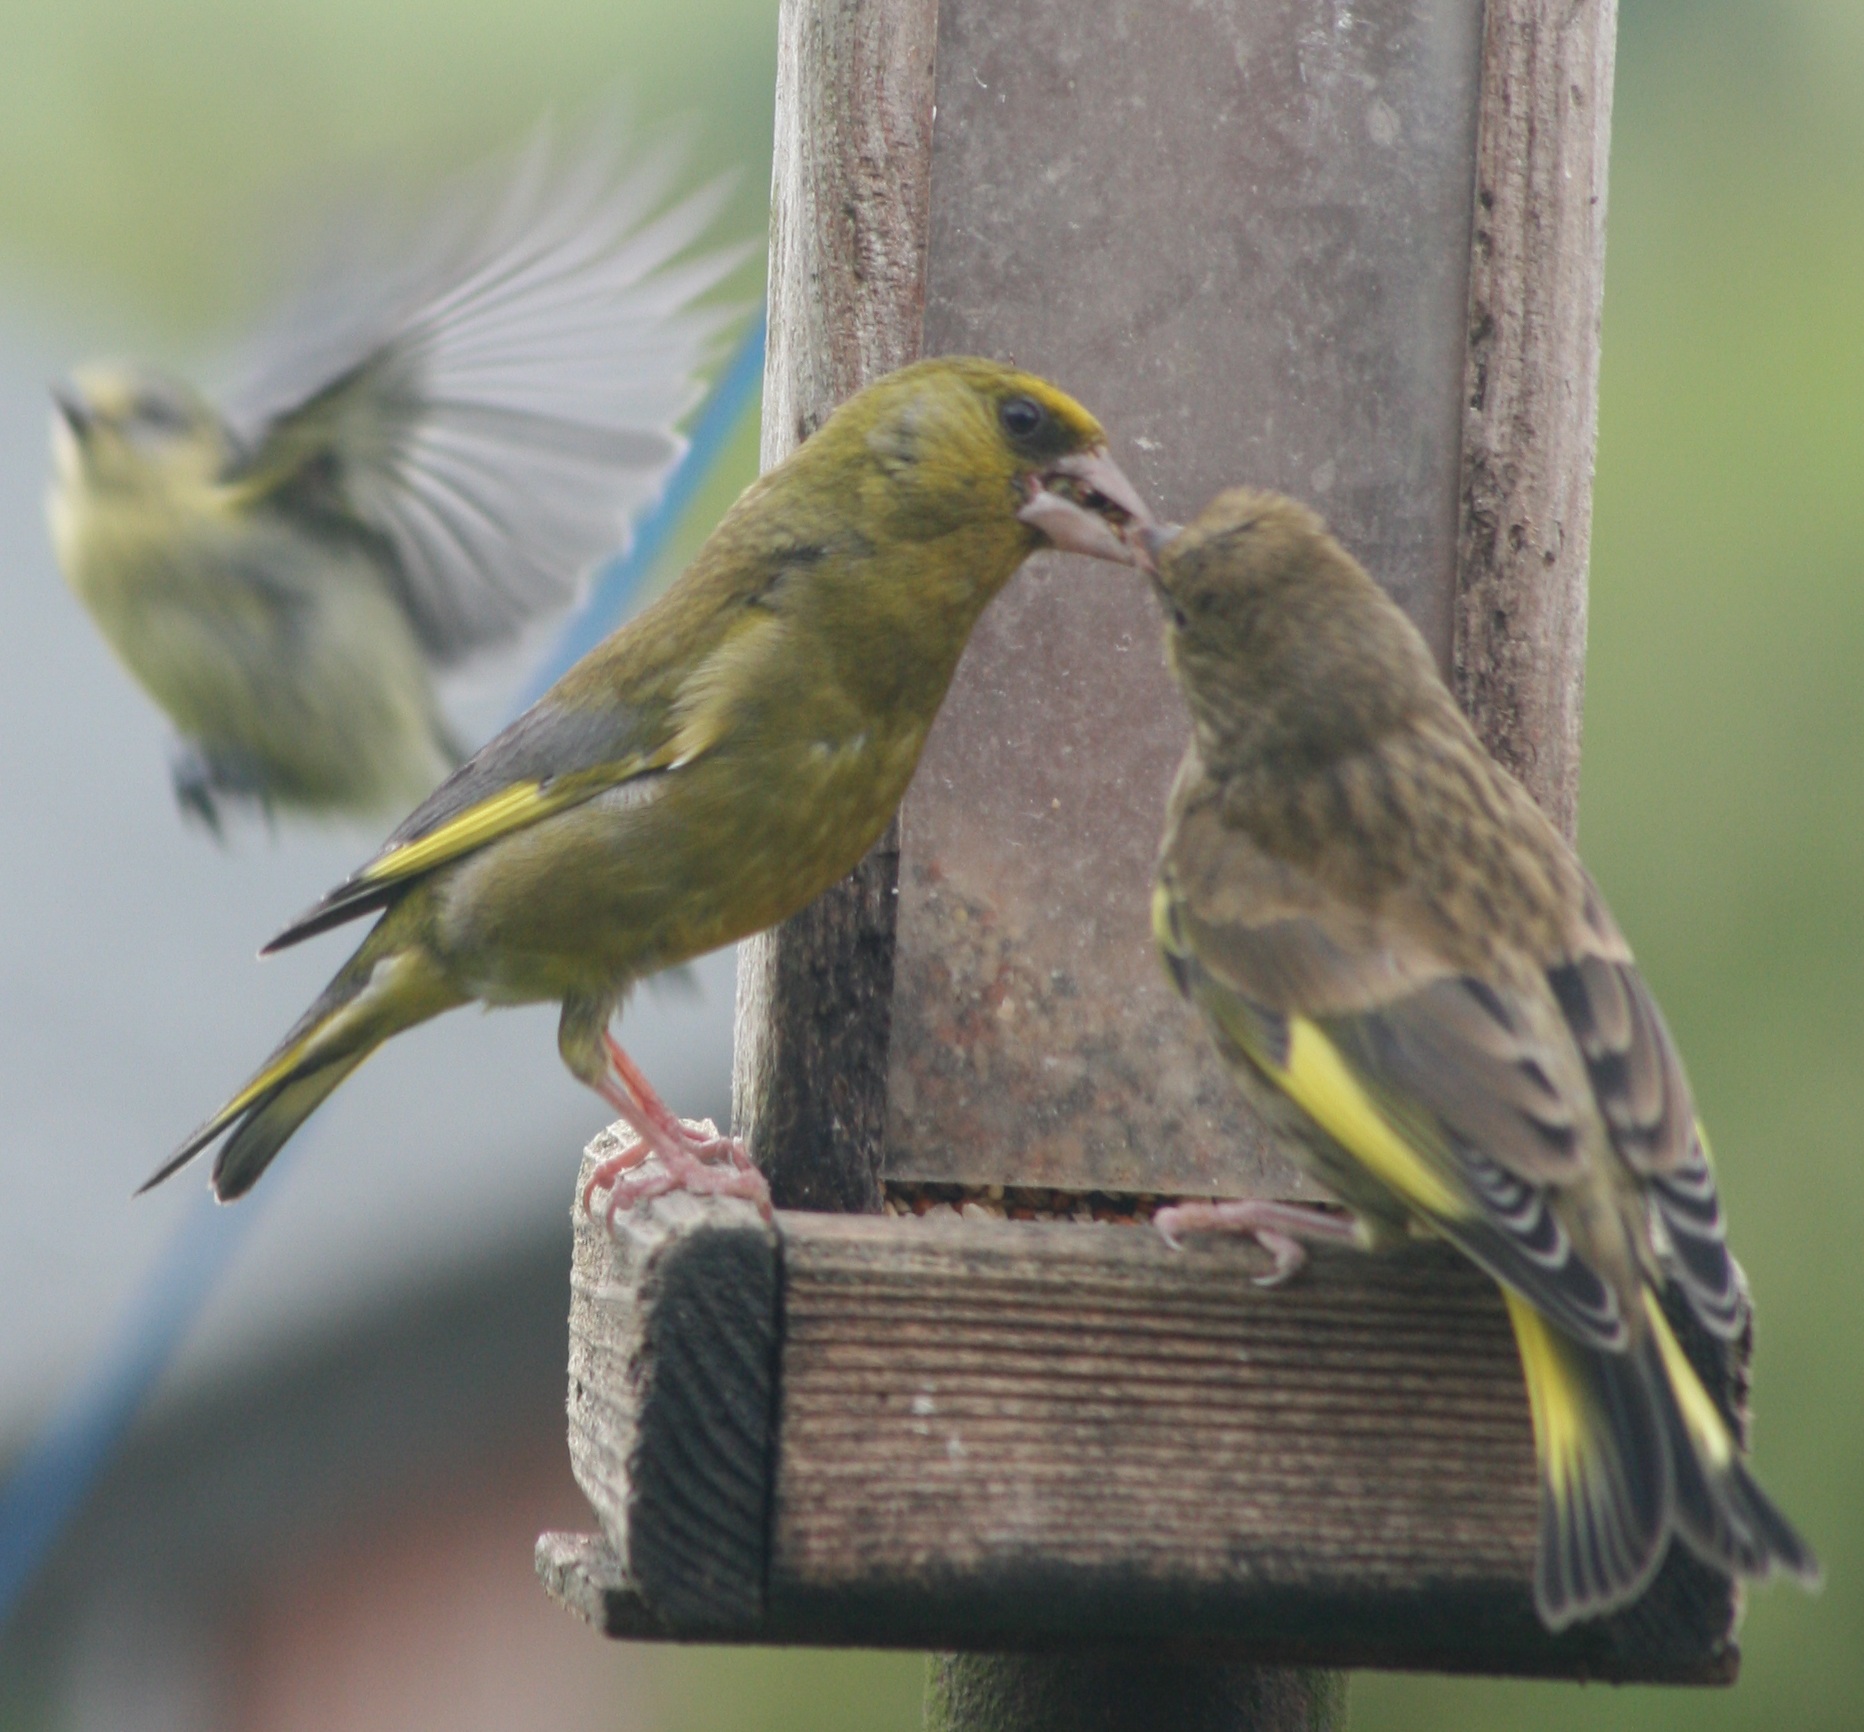 two small birds feeding at a bird feeder